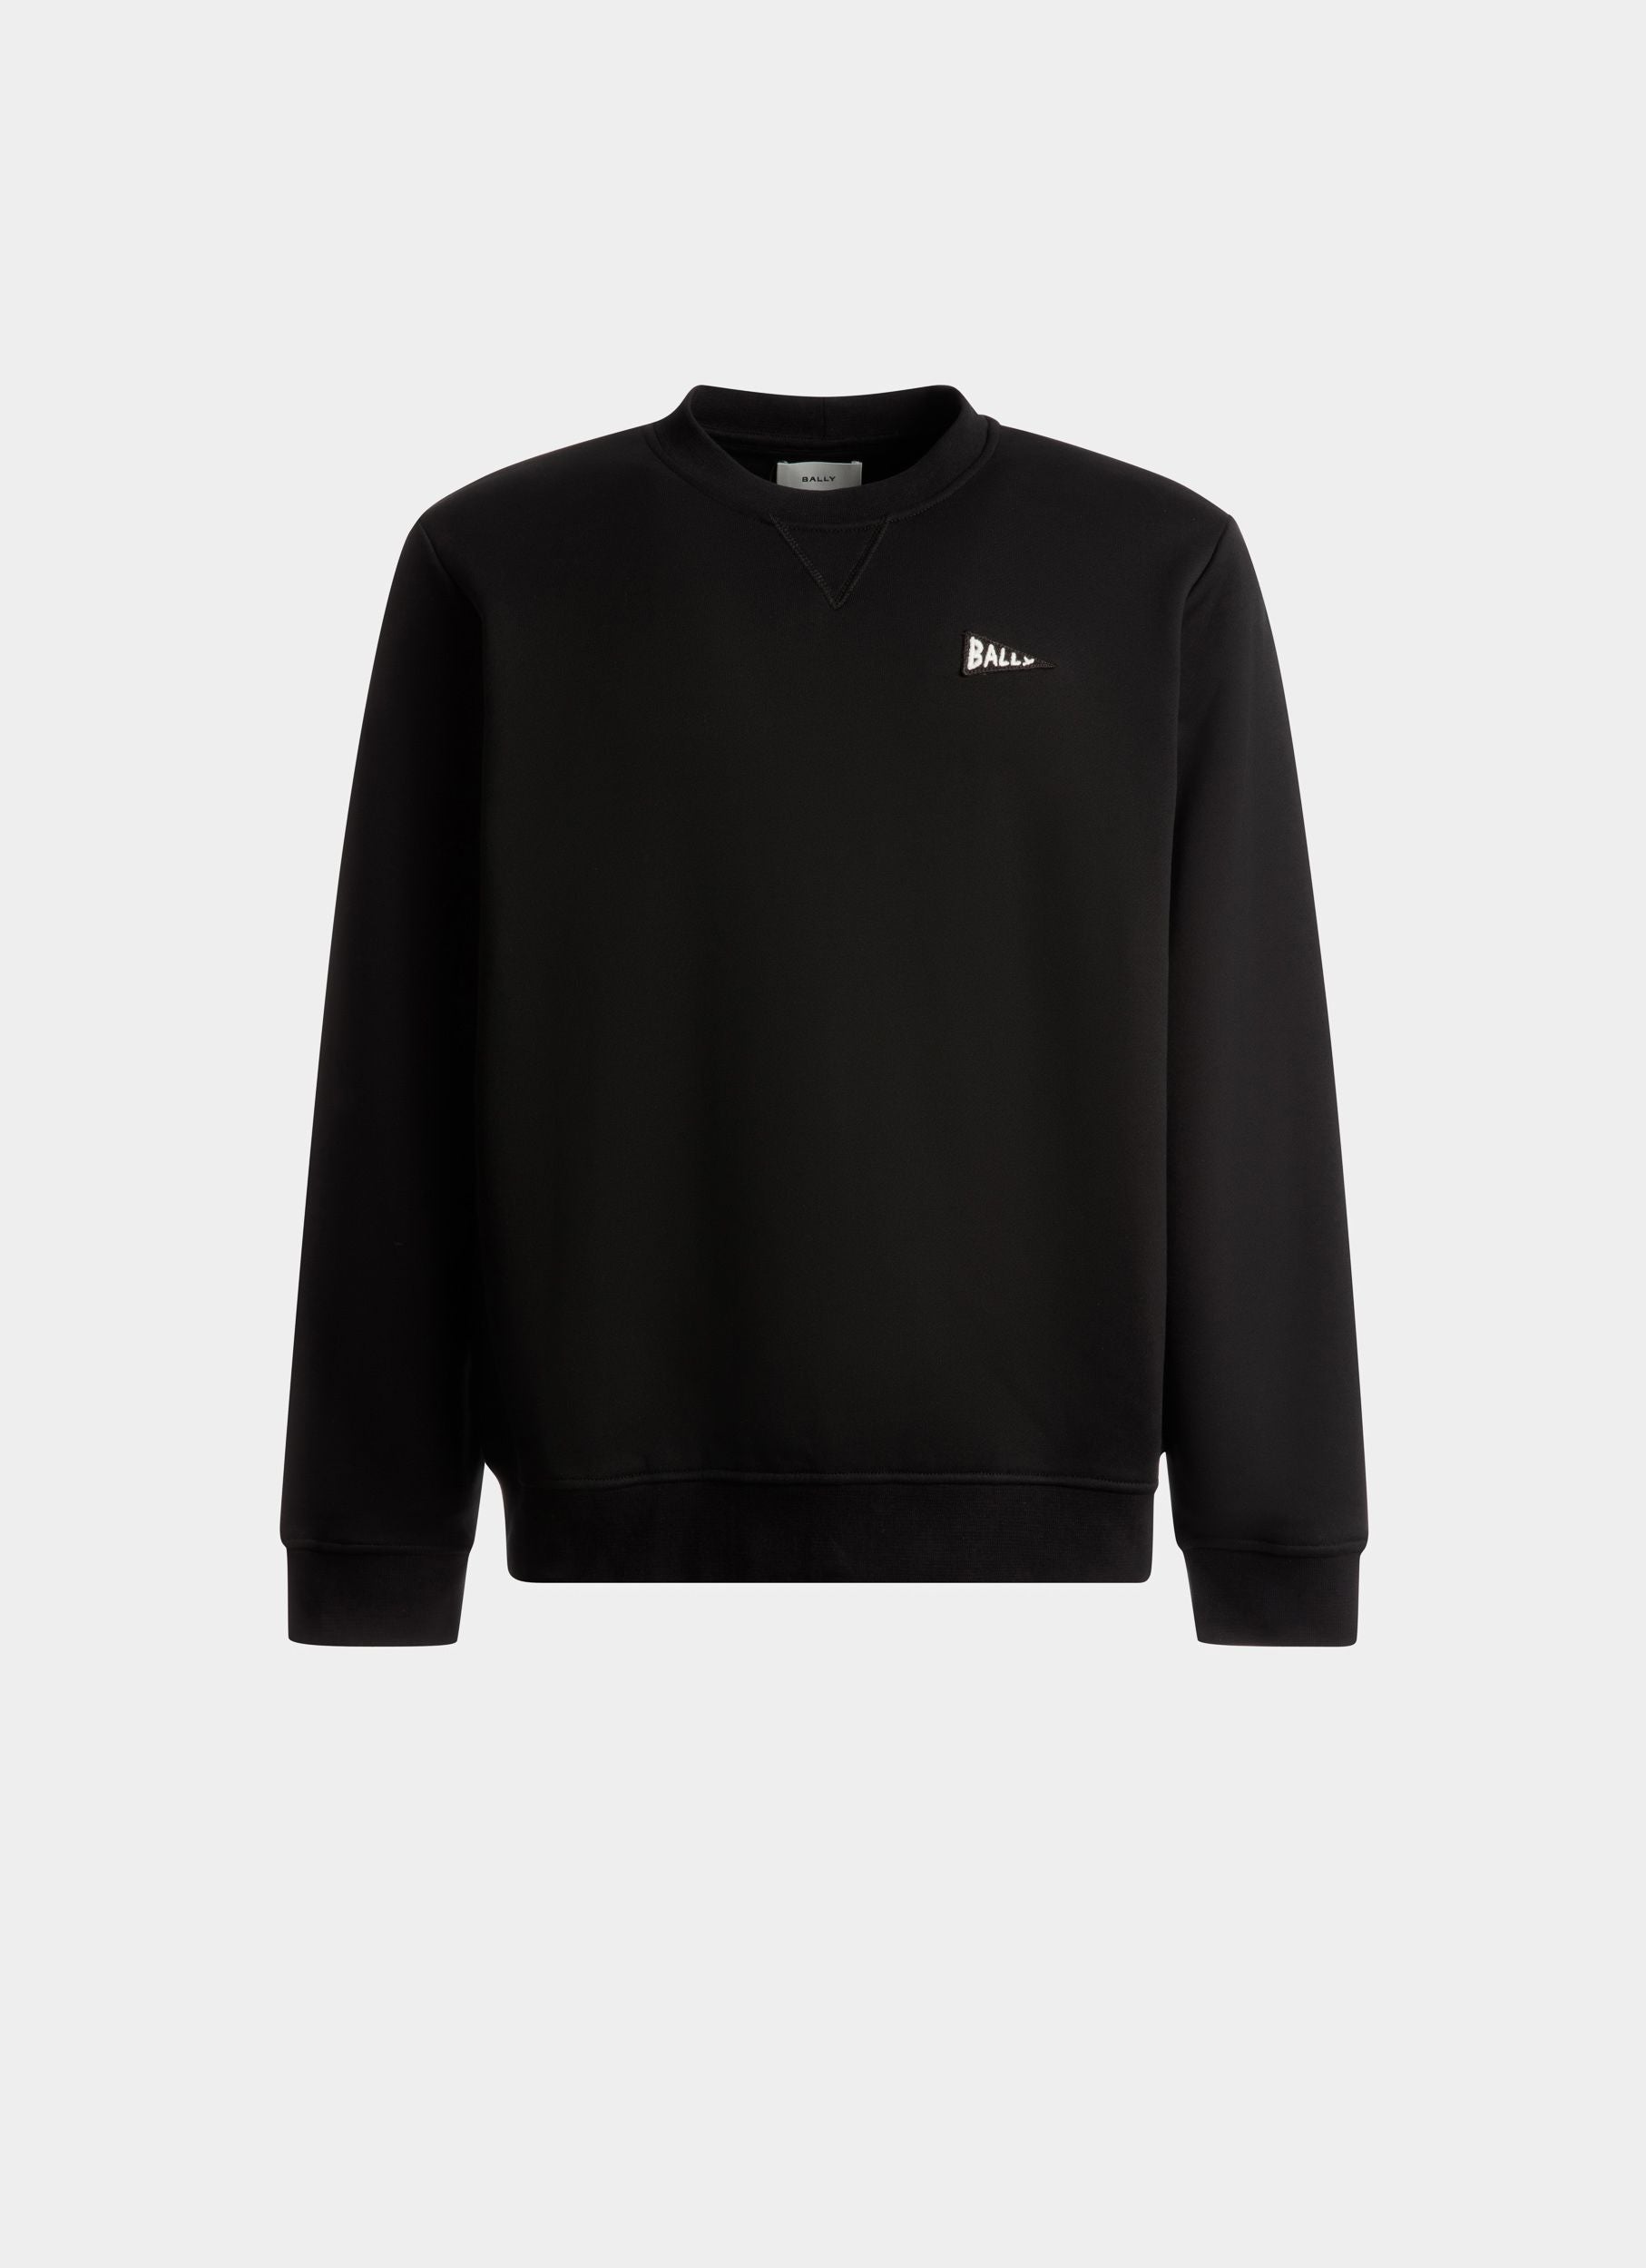 Sweatshirt | Men's Clothing | Black Stretch Cotton | Bally | Still Life Front